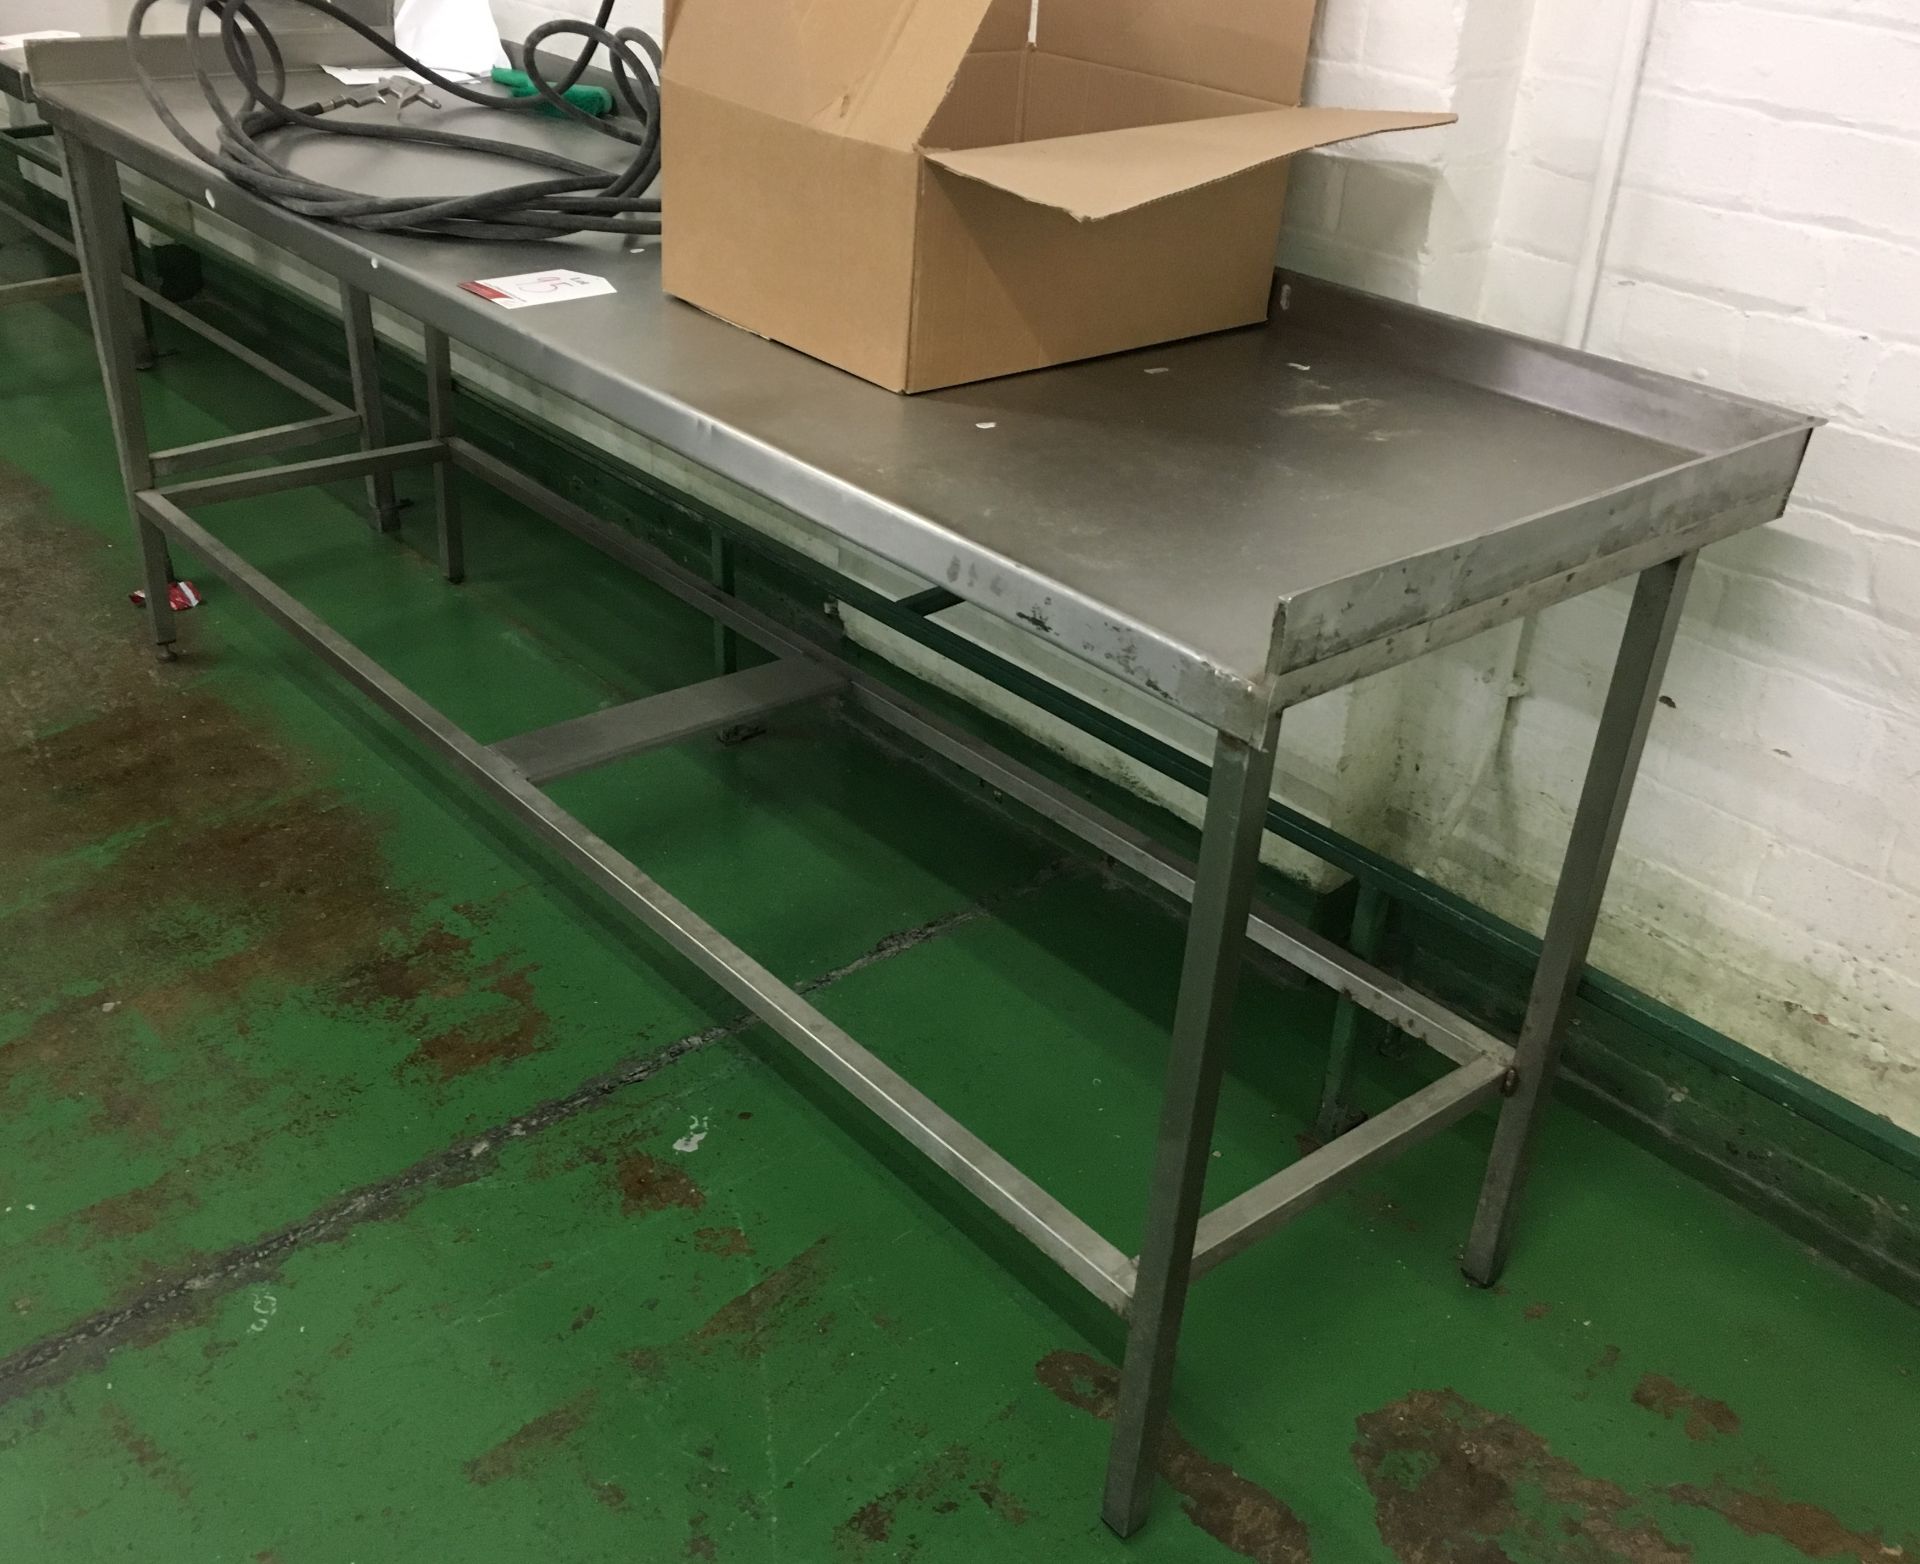 Stainless Steel Preparation Table - 230cm x 70cm x 90cm